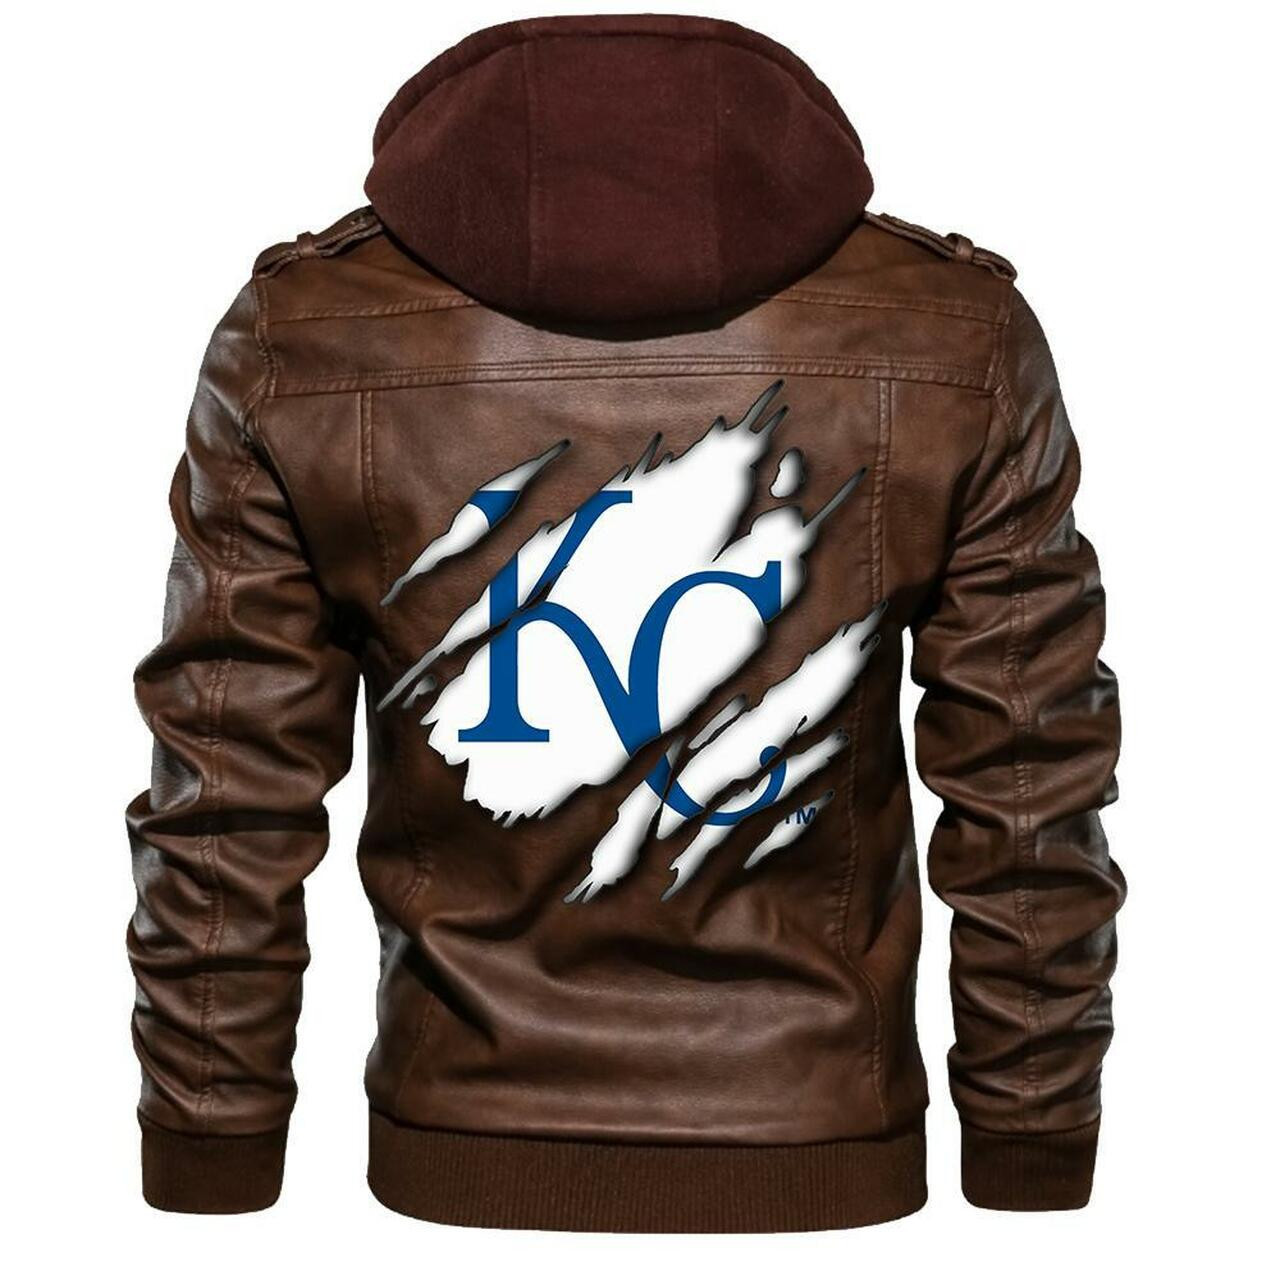 Top leather jacket Sells Best on Techcomshop 155